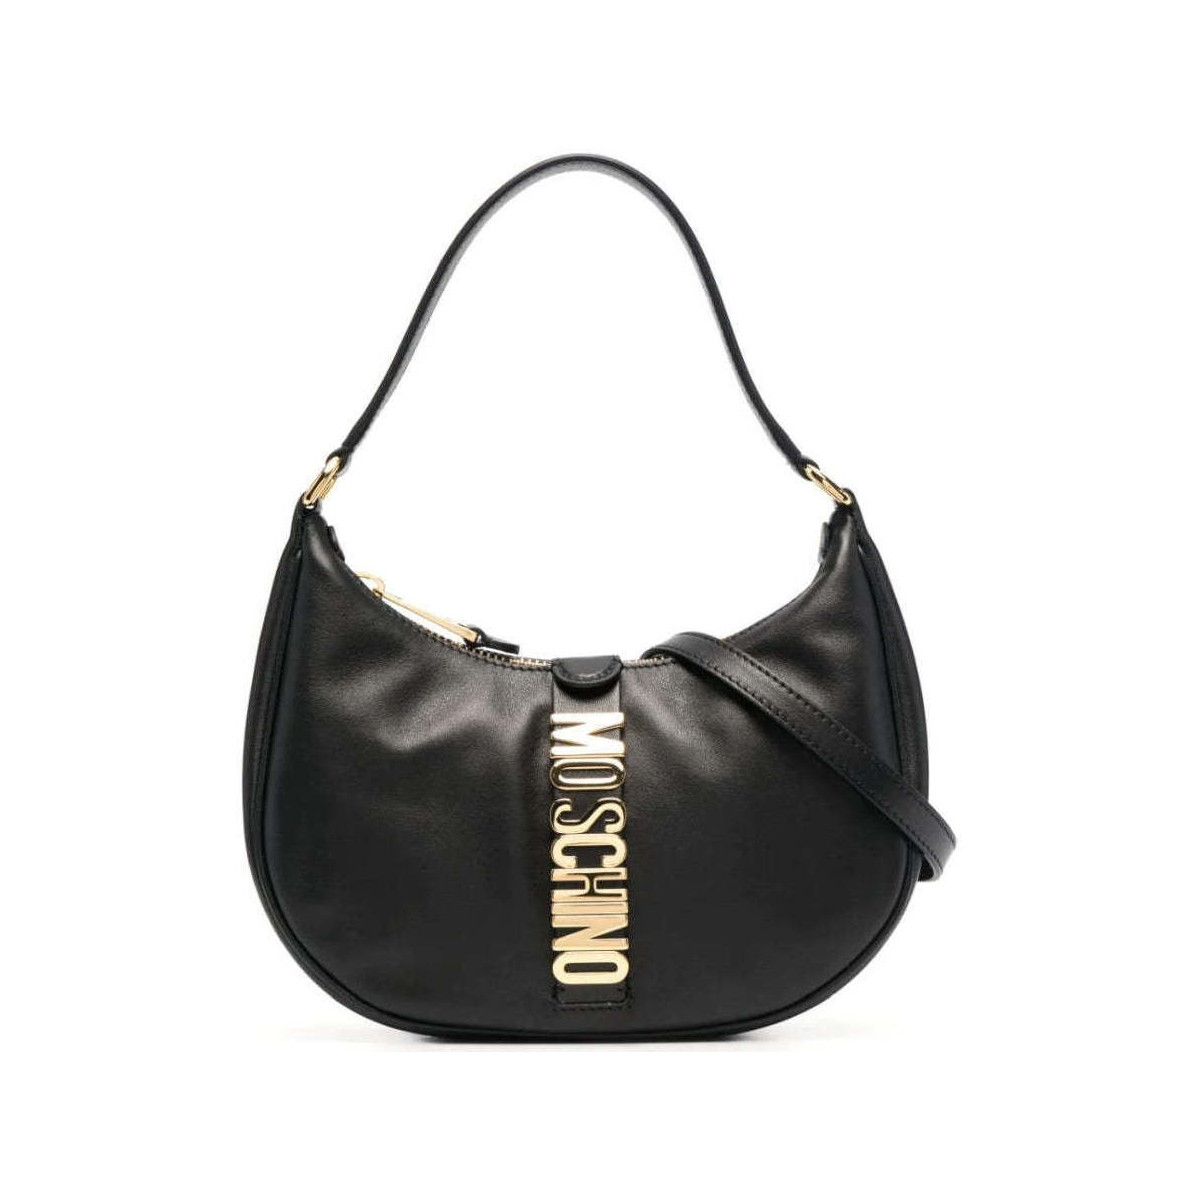 Sacs Femme Metal Chain Leather Shoulder ETRO Bag shoulder ETRO bag Noir